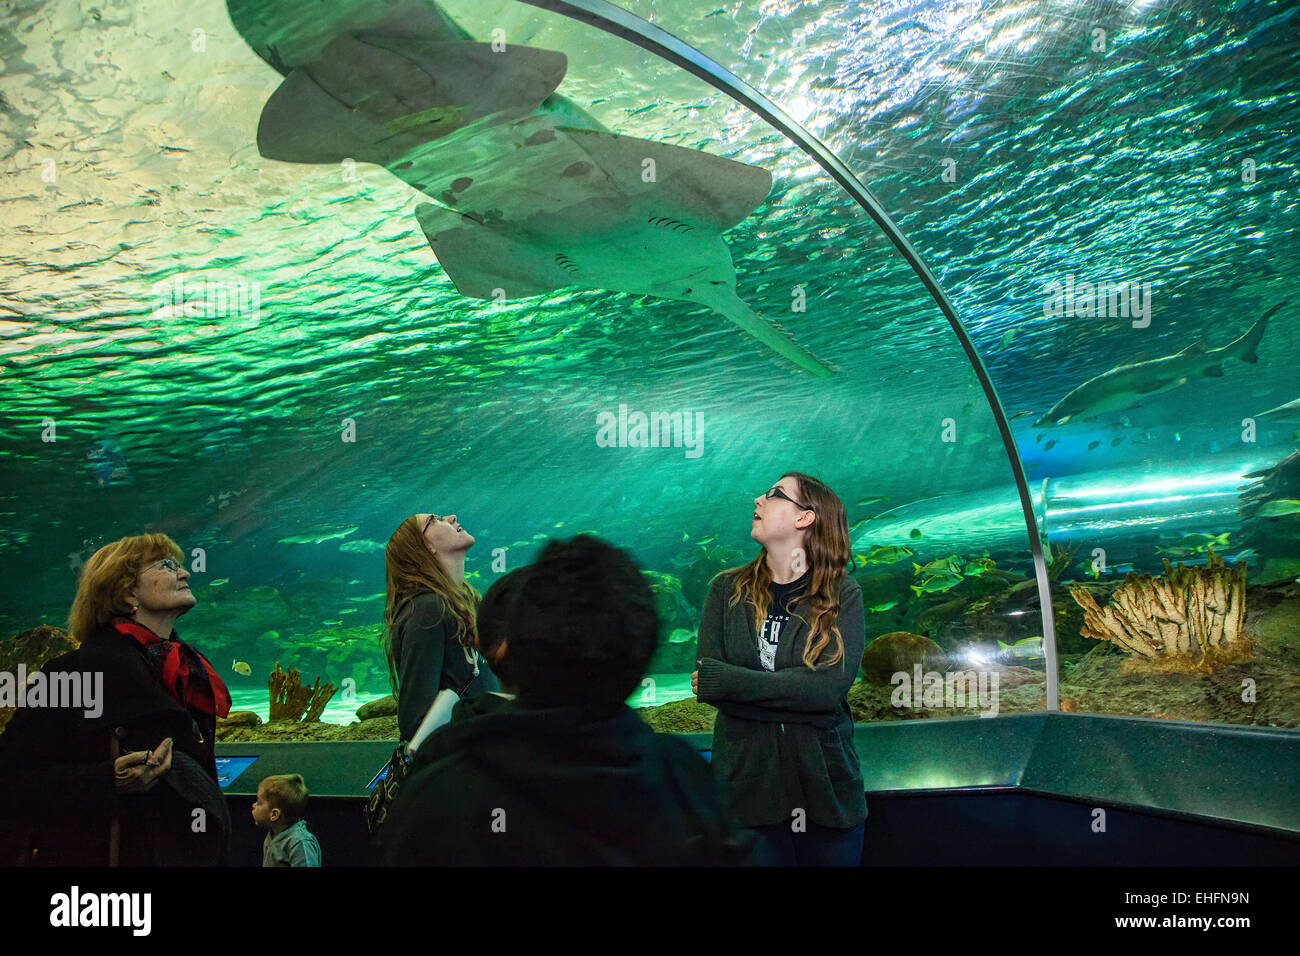 Ripleys Aquarium in Toronto,Ontario.;Canada, tourist attraction near the CN Tower Stock Photo